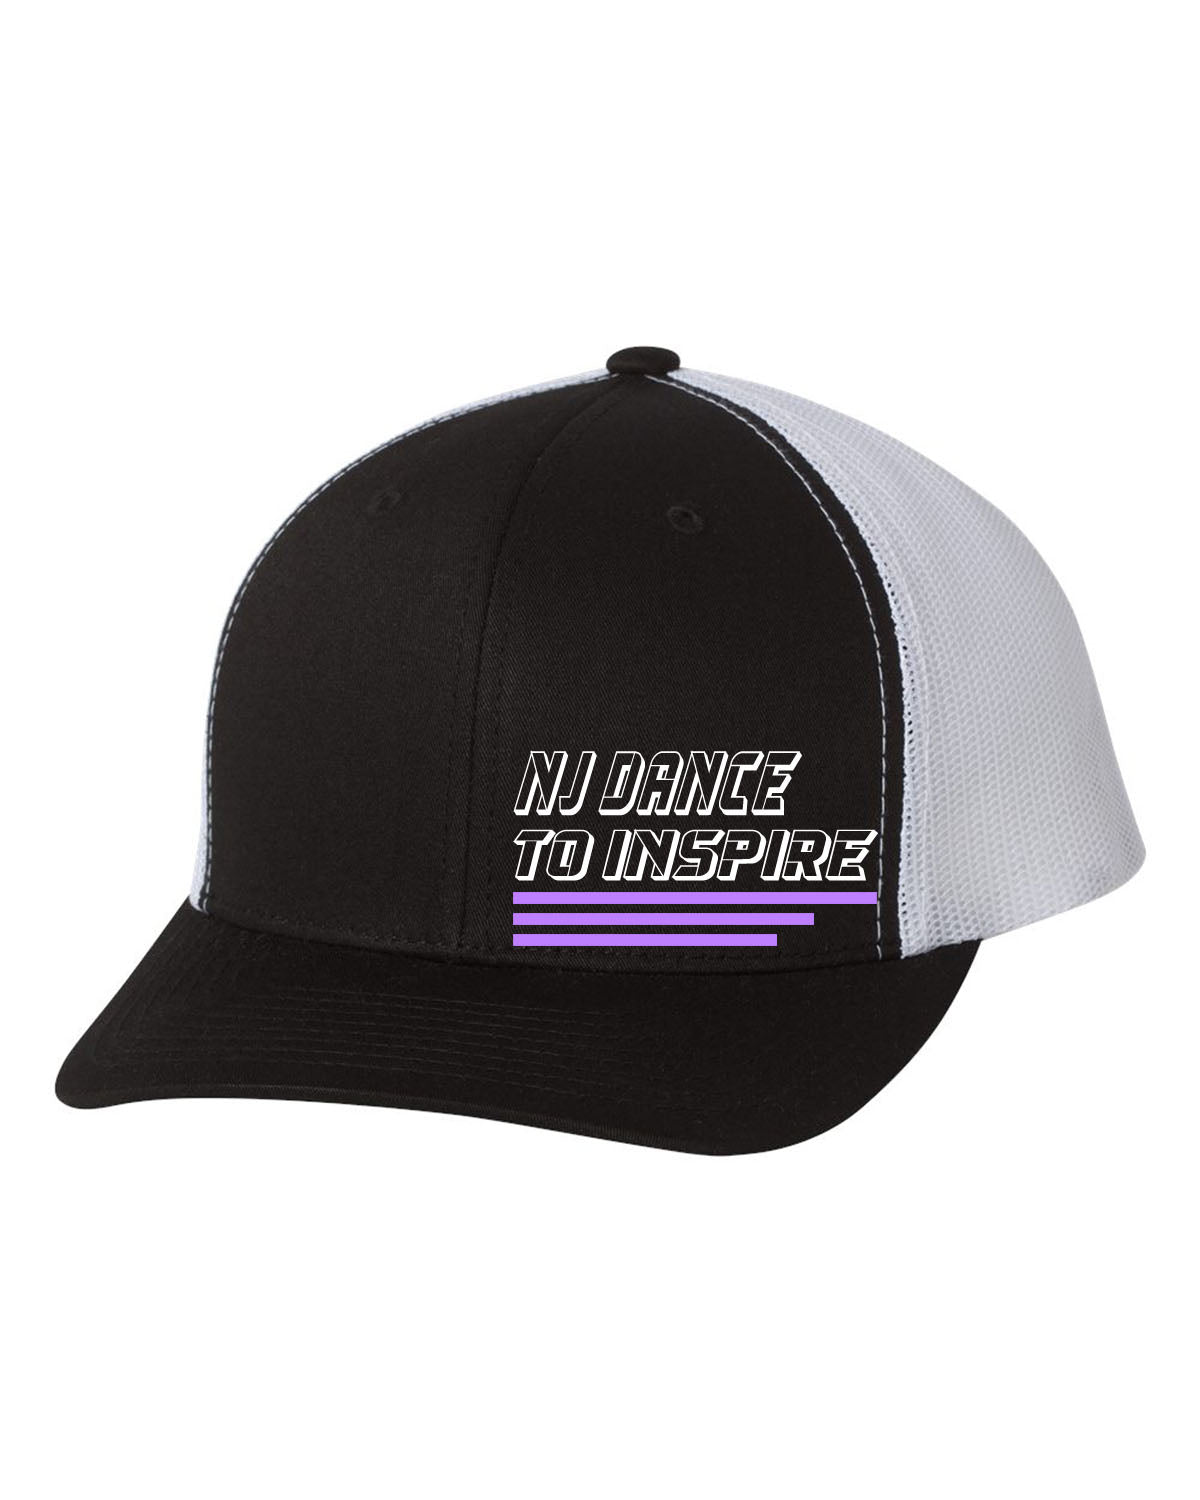 NJ Dance Design 13 Trucker Hat